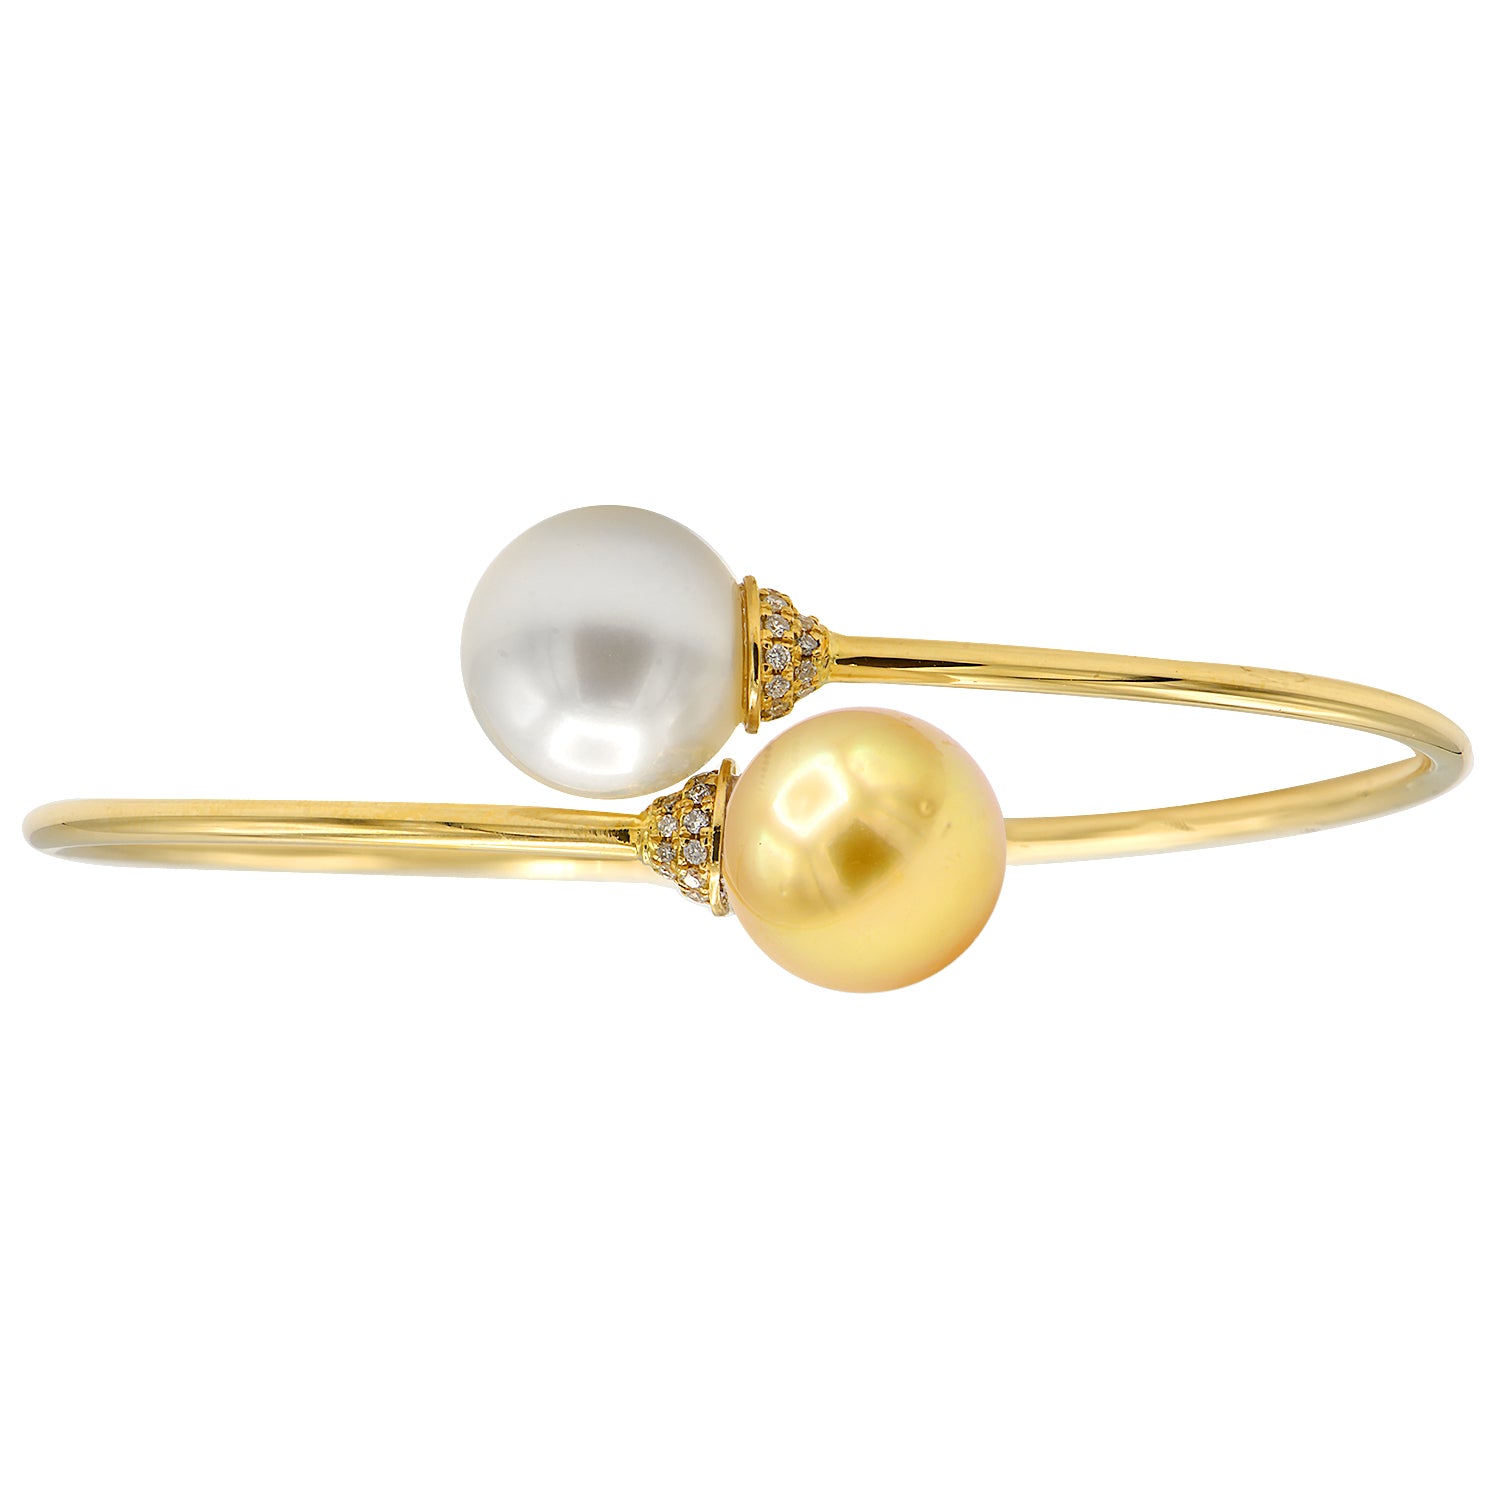 18KY White & Golden South Sea Pearl Bracelet, 11-12mm